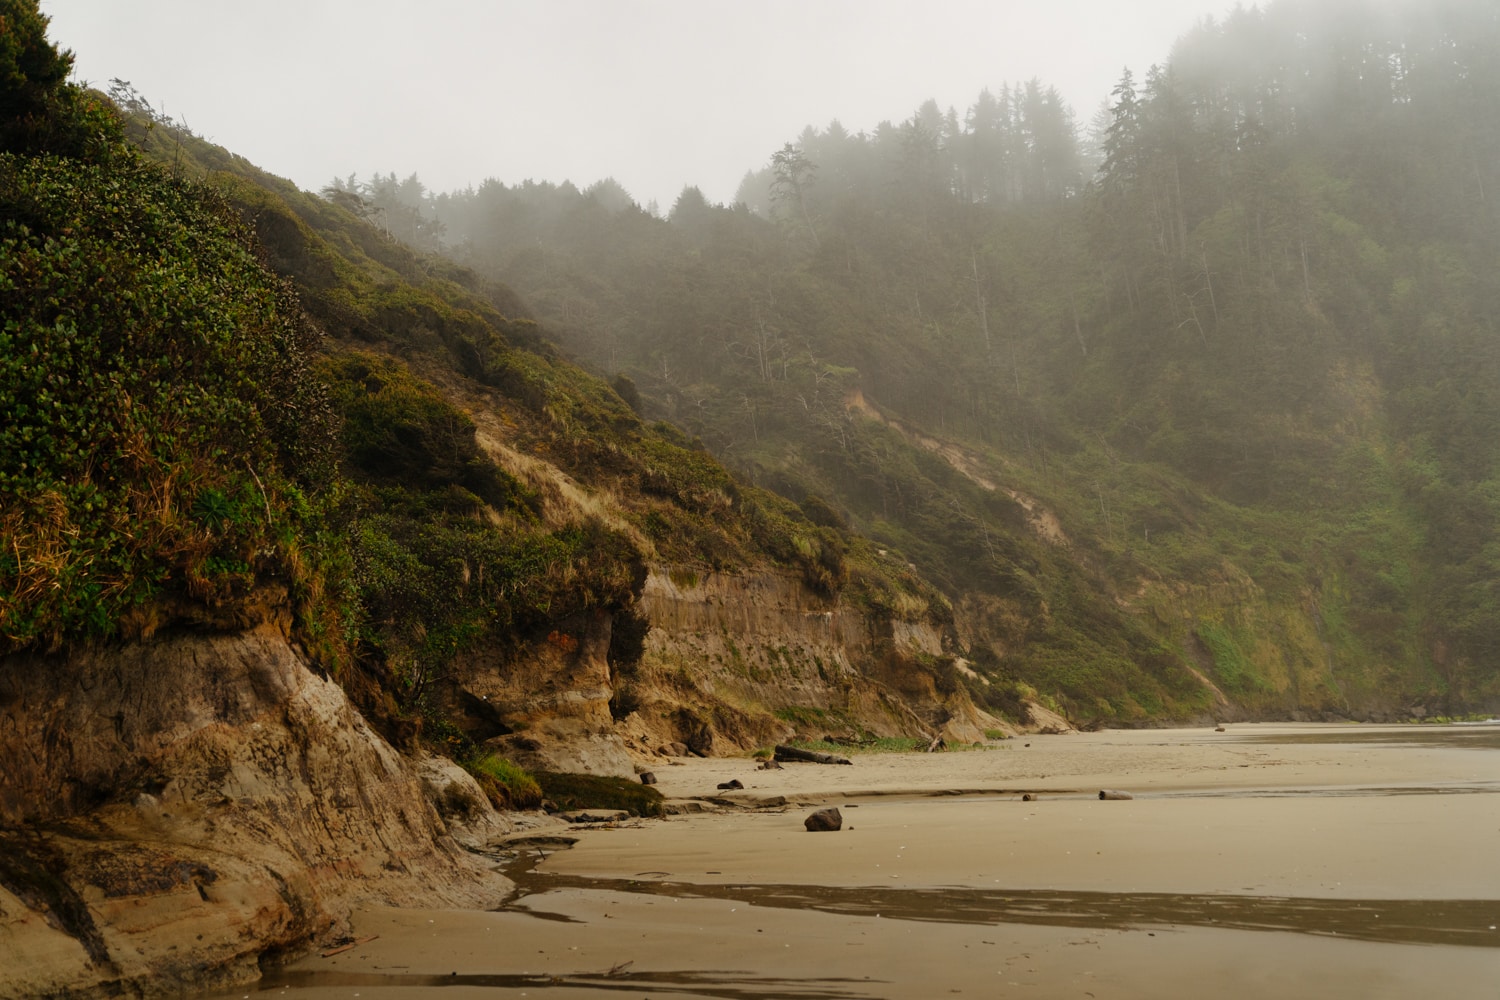 Hike the Hobbit Beach Trail on the Oregon Coast